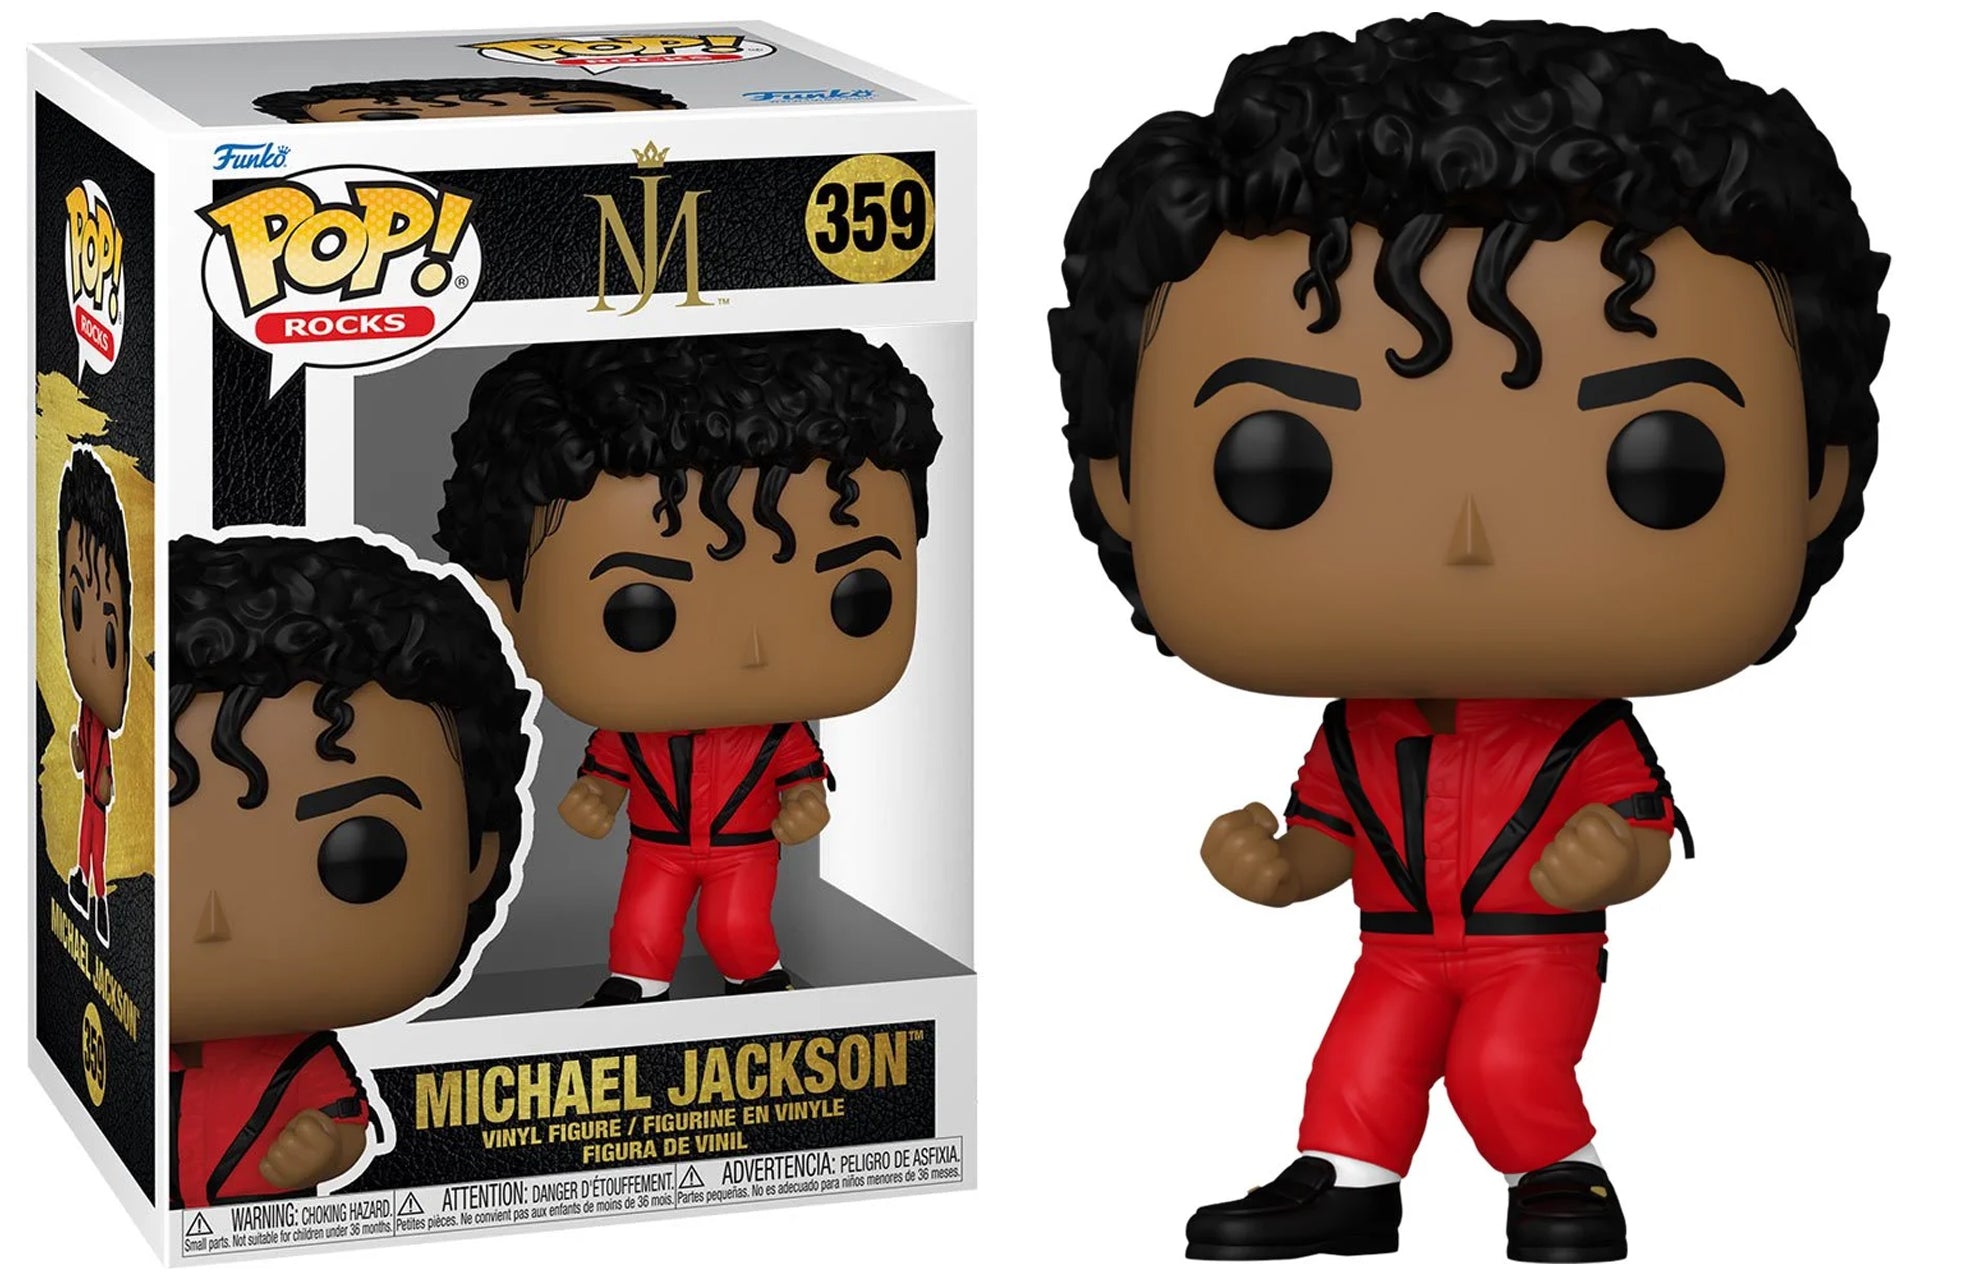 All the Funko POP Michael Jackson figures